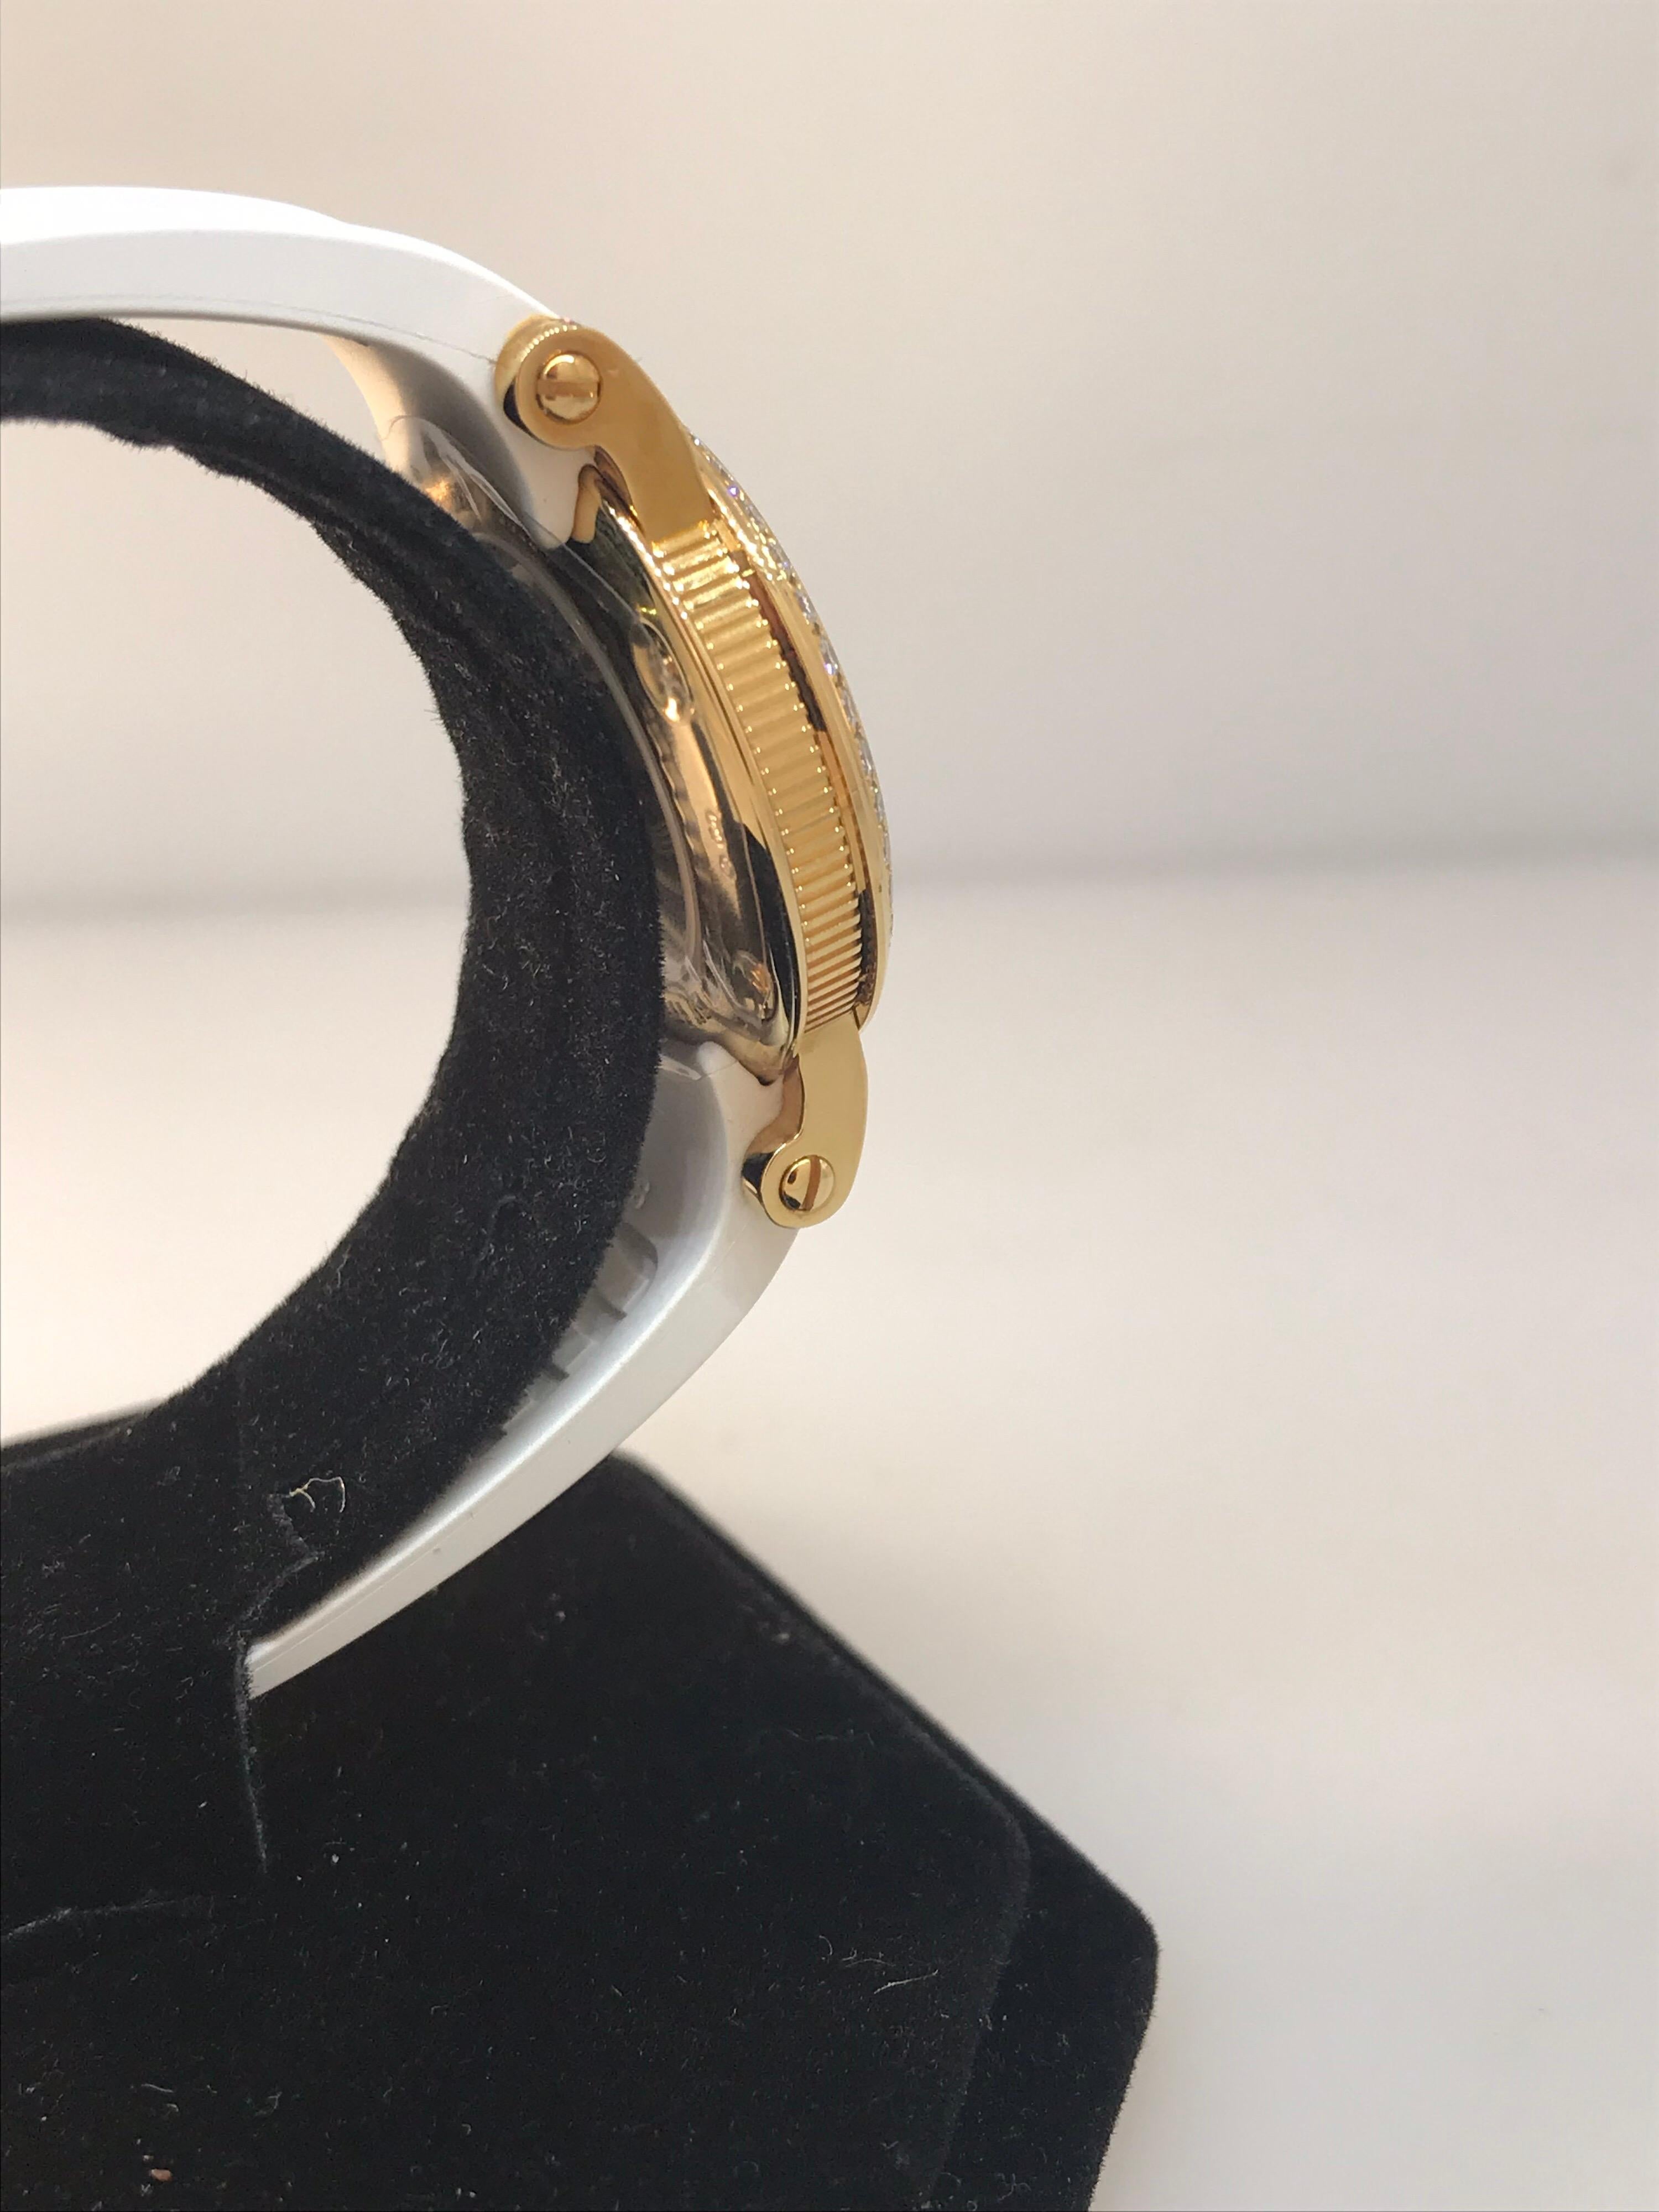 Women's Breguet Marine Yellow Gold Diamond Bezel Ladies Watch 8818ba/59/564.dd00 New For Sale